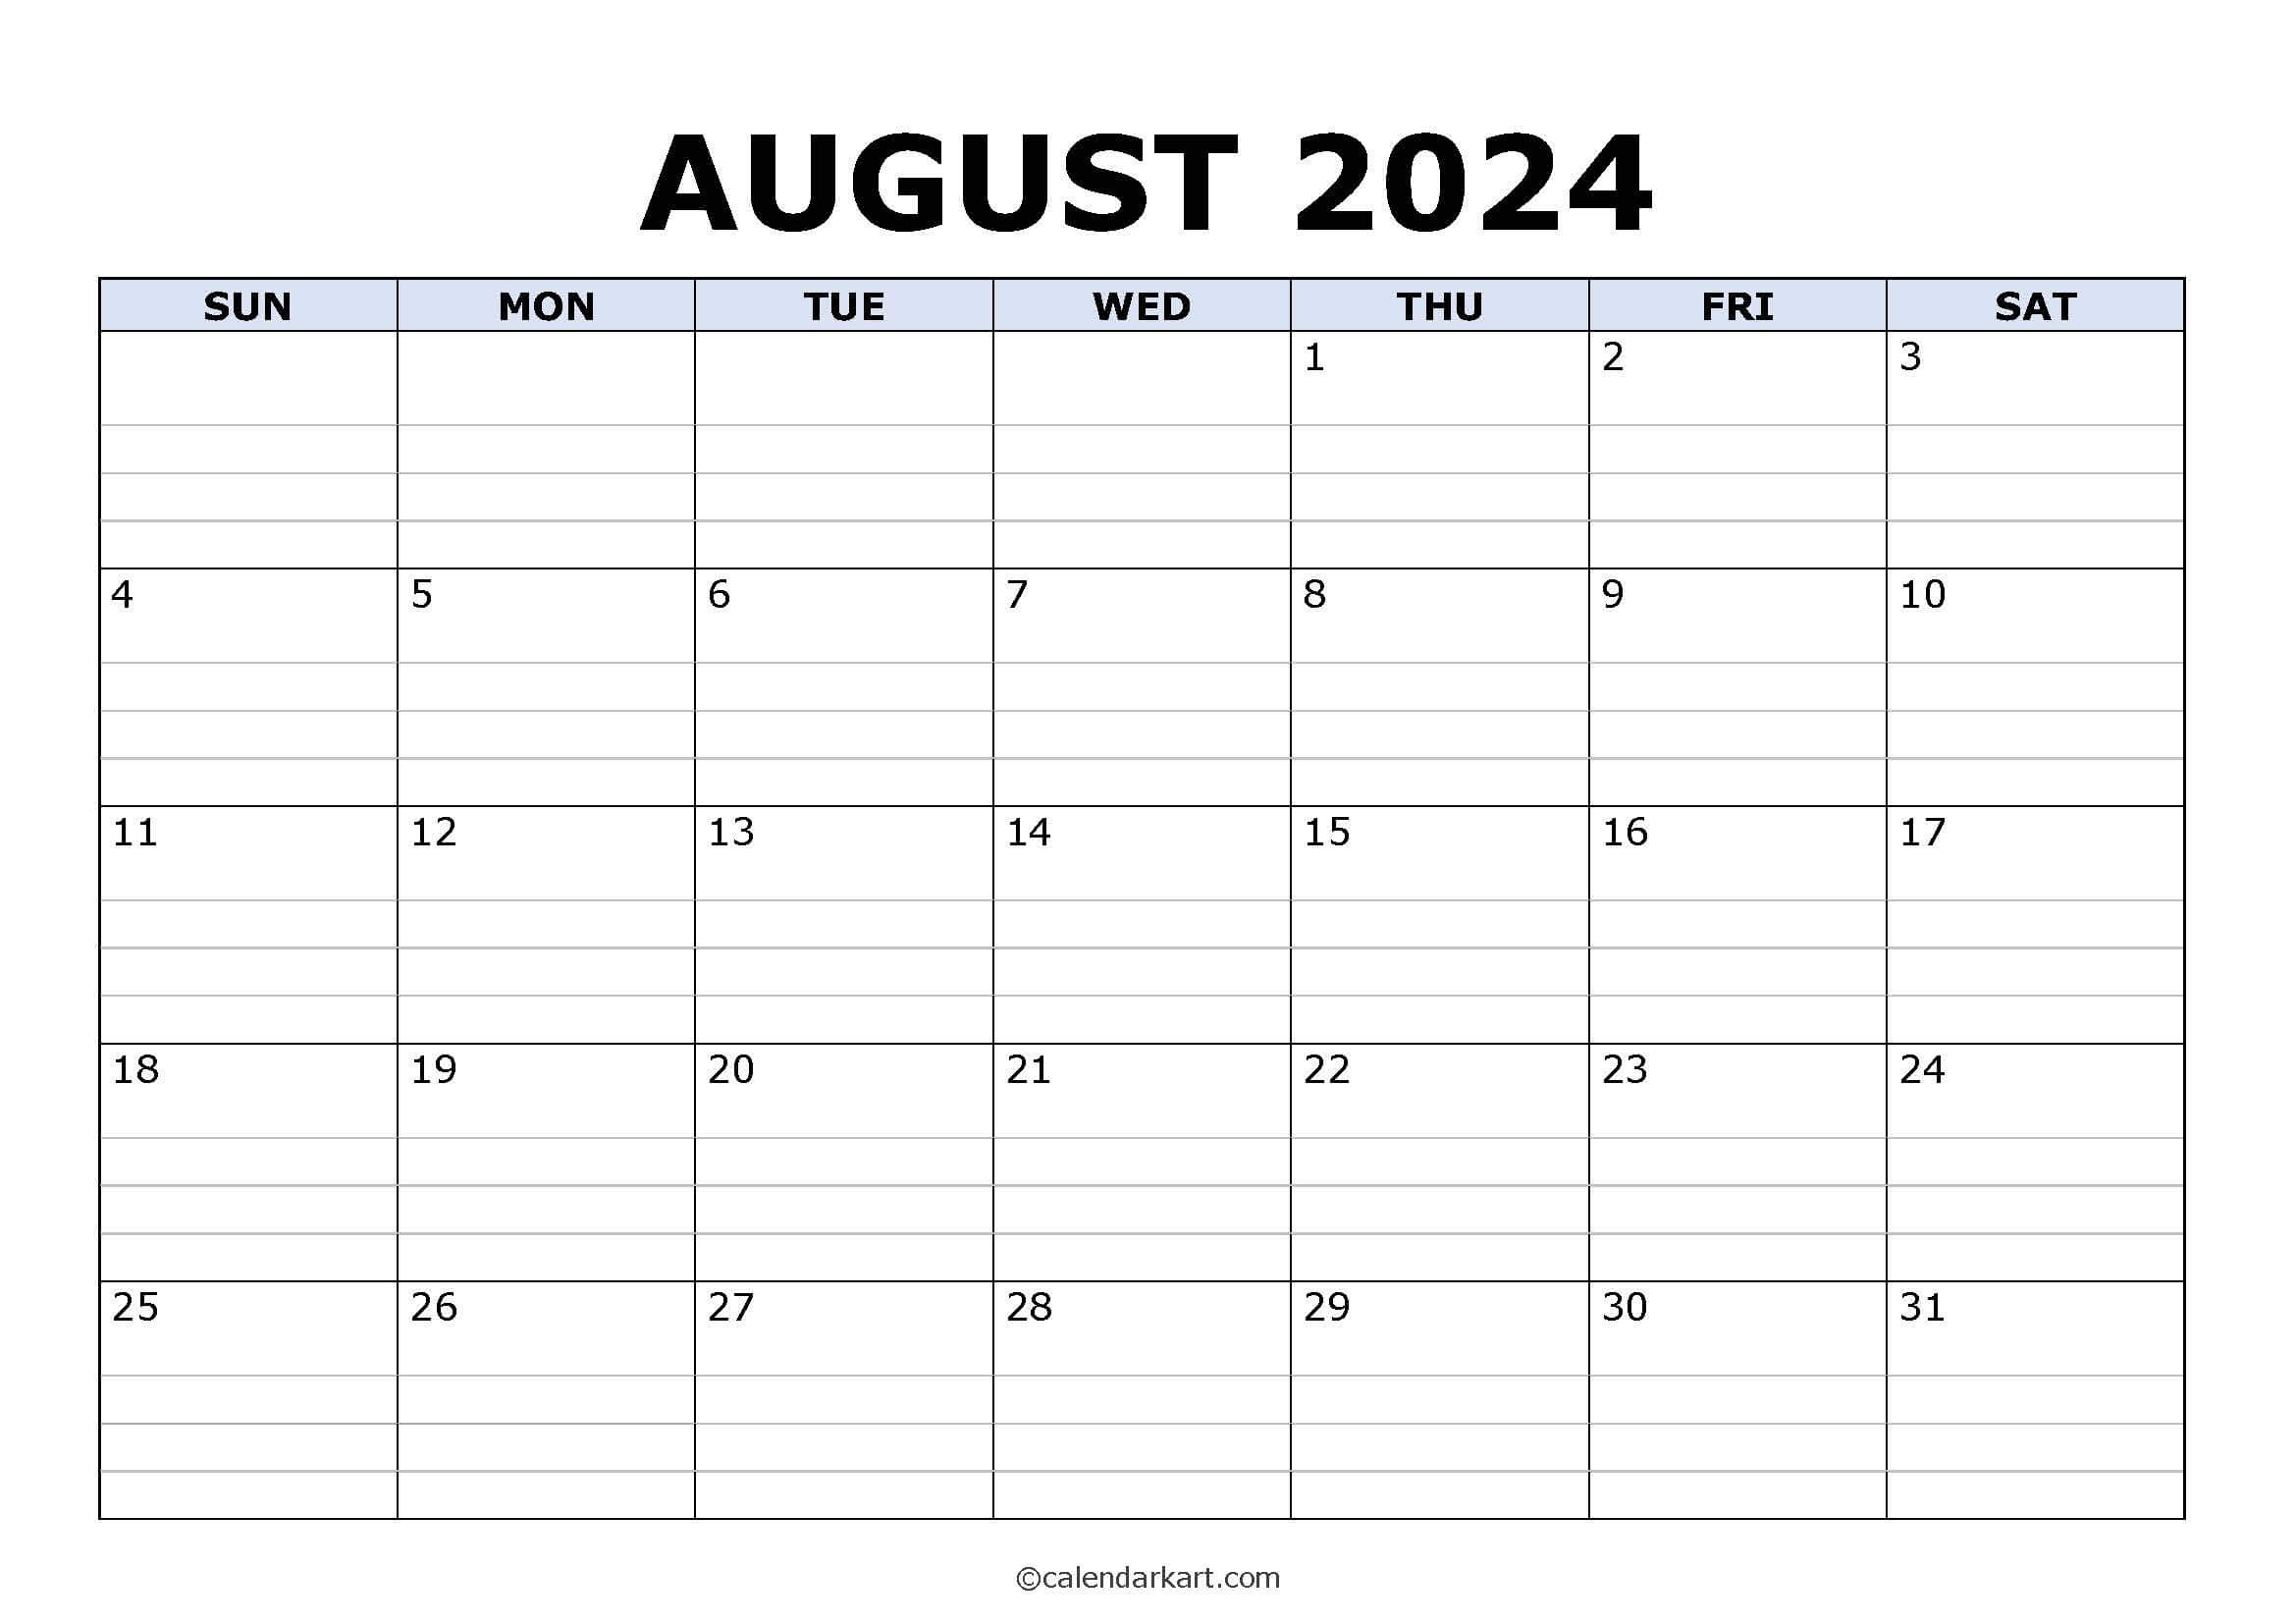 Free Printable August 2024 Calendars - Calendarkart inside Free Printable August 2024 Calendar With Lines